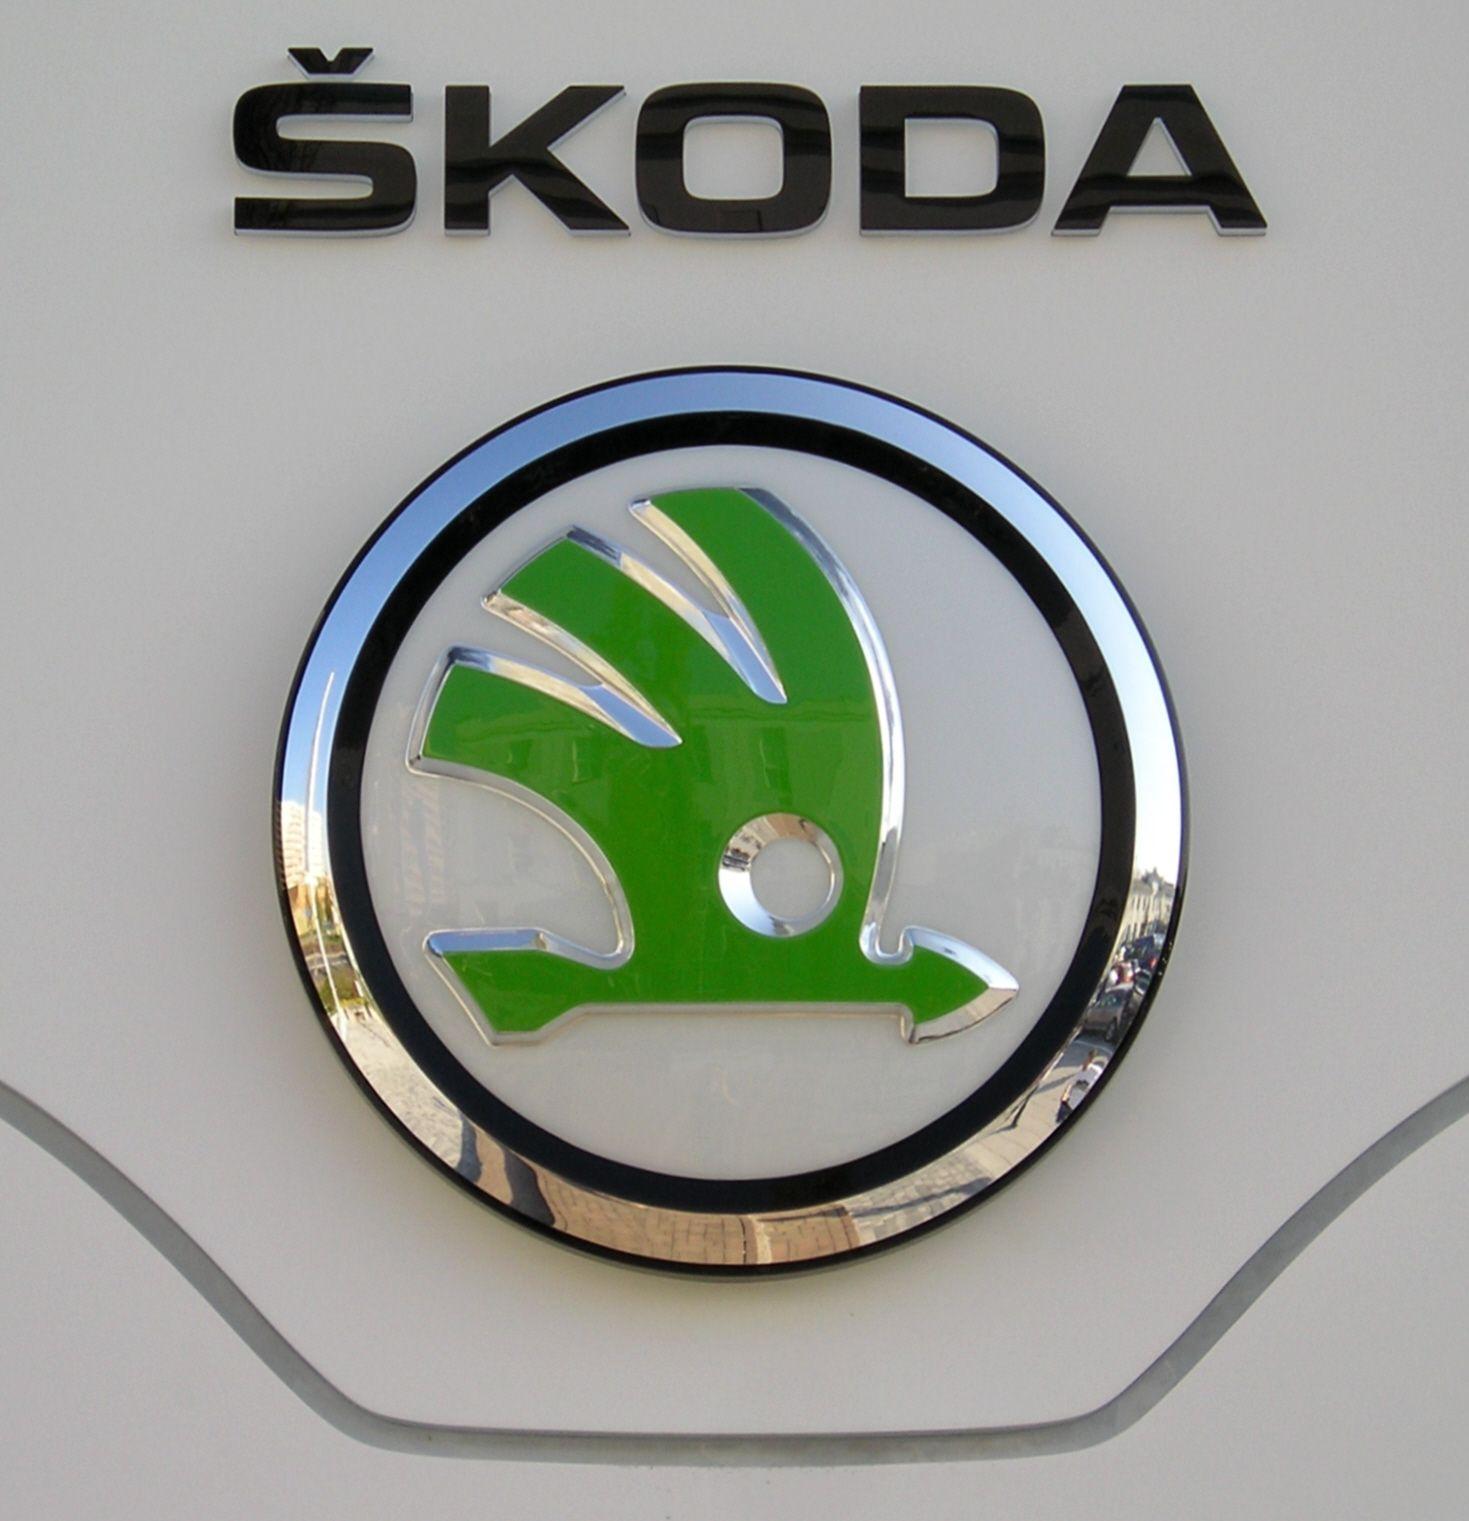 Indian European Car Logo - Škoda Logo, Škoda Car Symbol Meaning and History | Car Brand Names.com